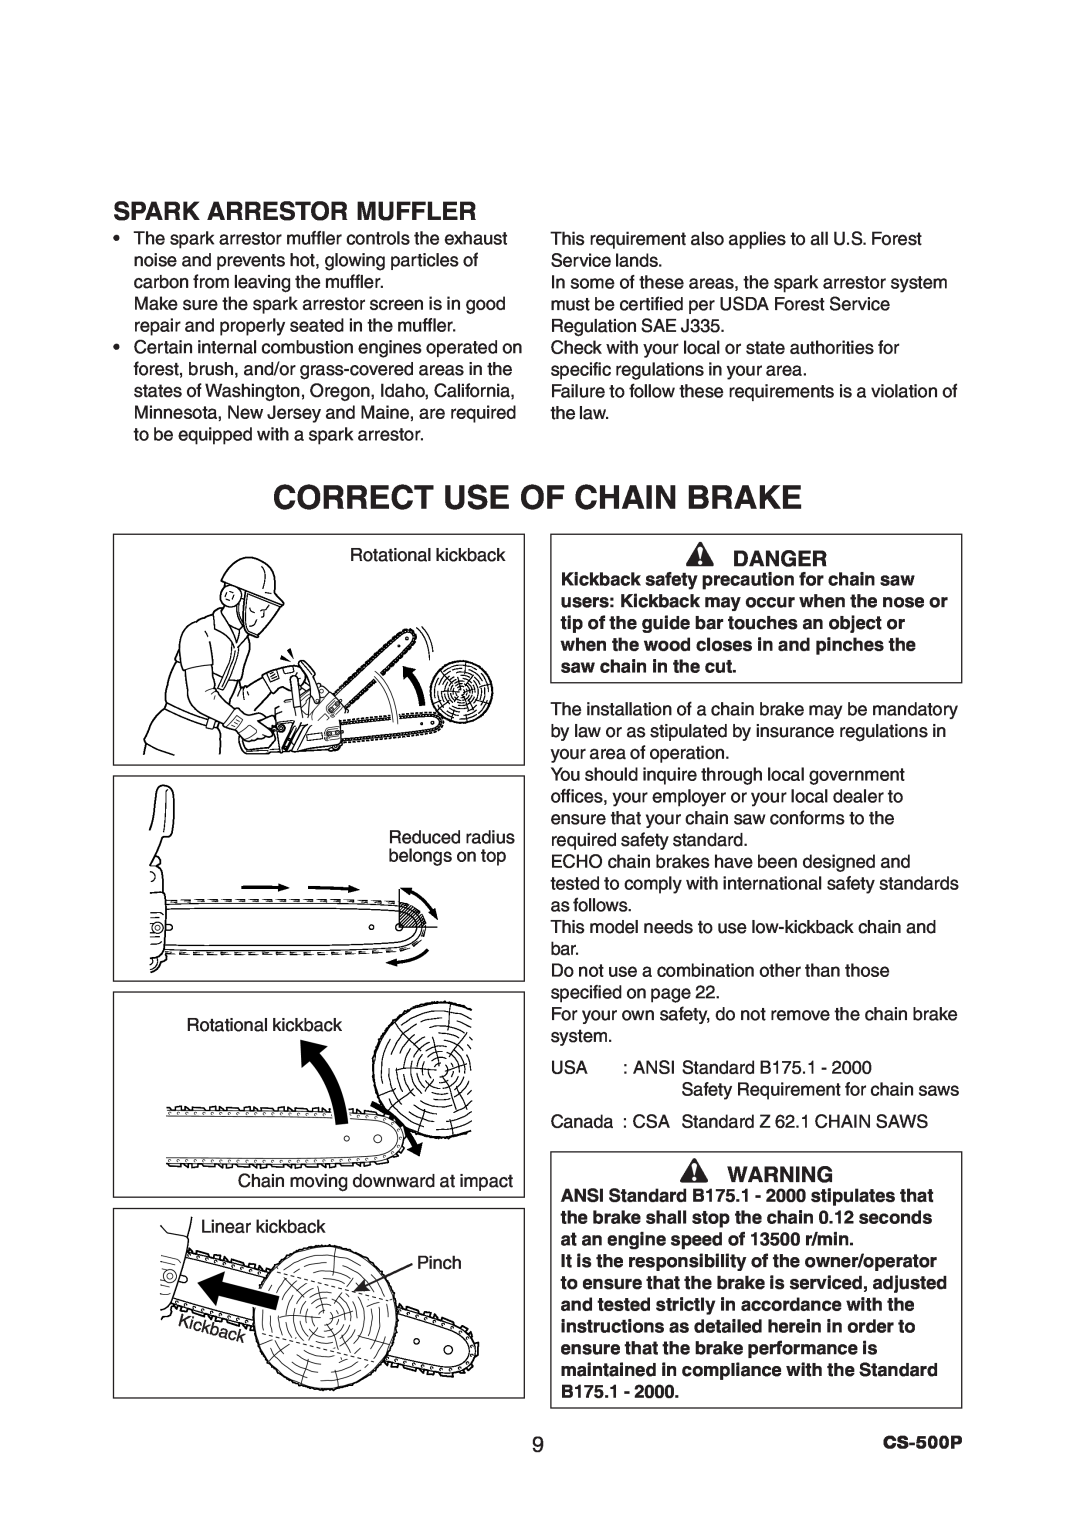 Echo CS-500P instruction manual Correct Use Of Chain Brake, Spark Arrestor Muffler, Danger 